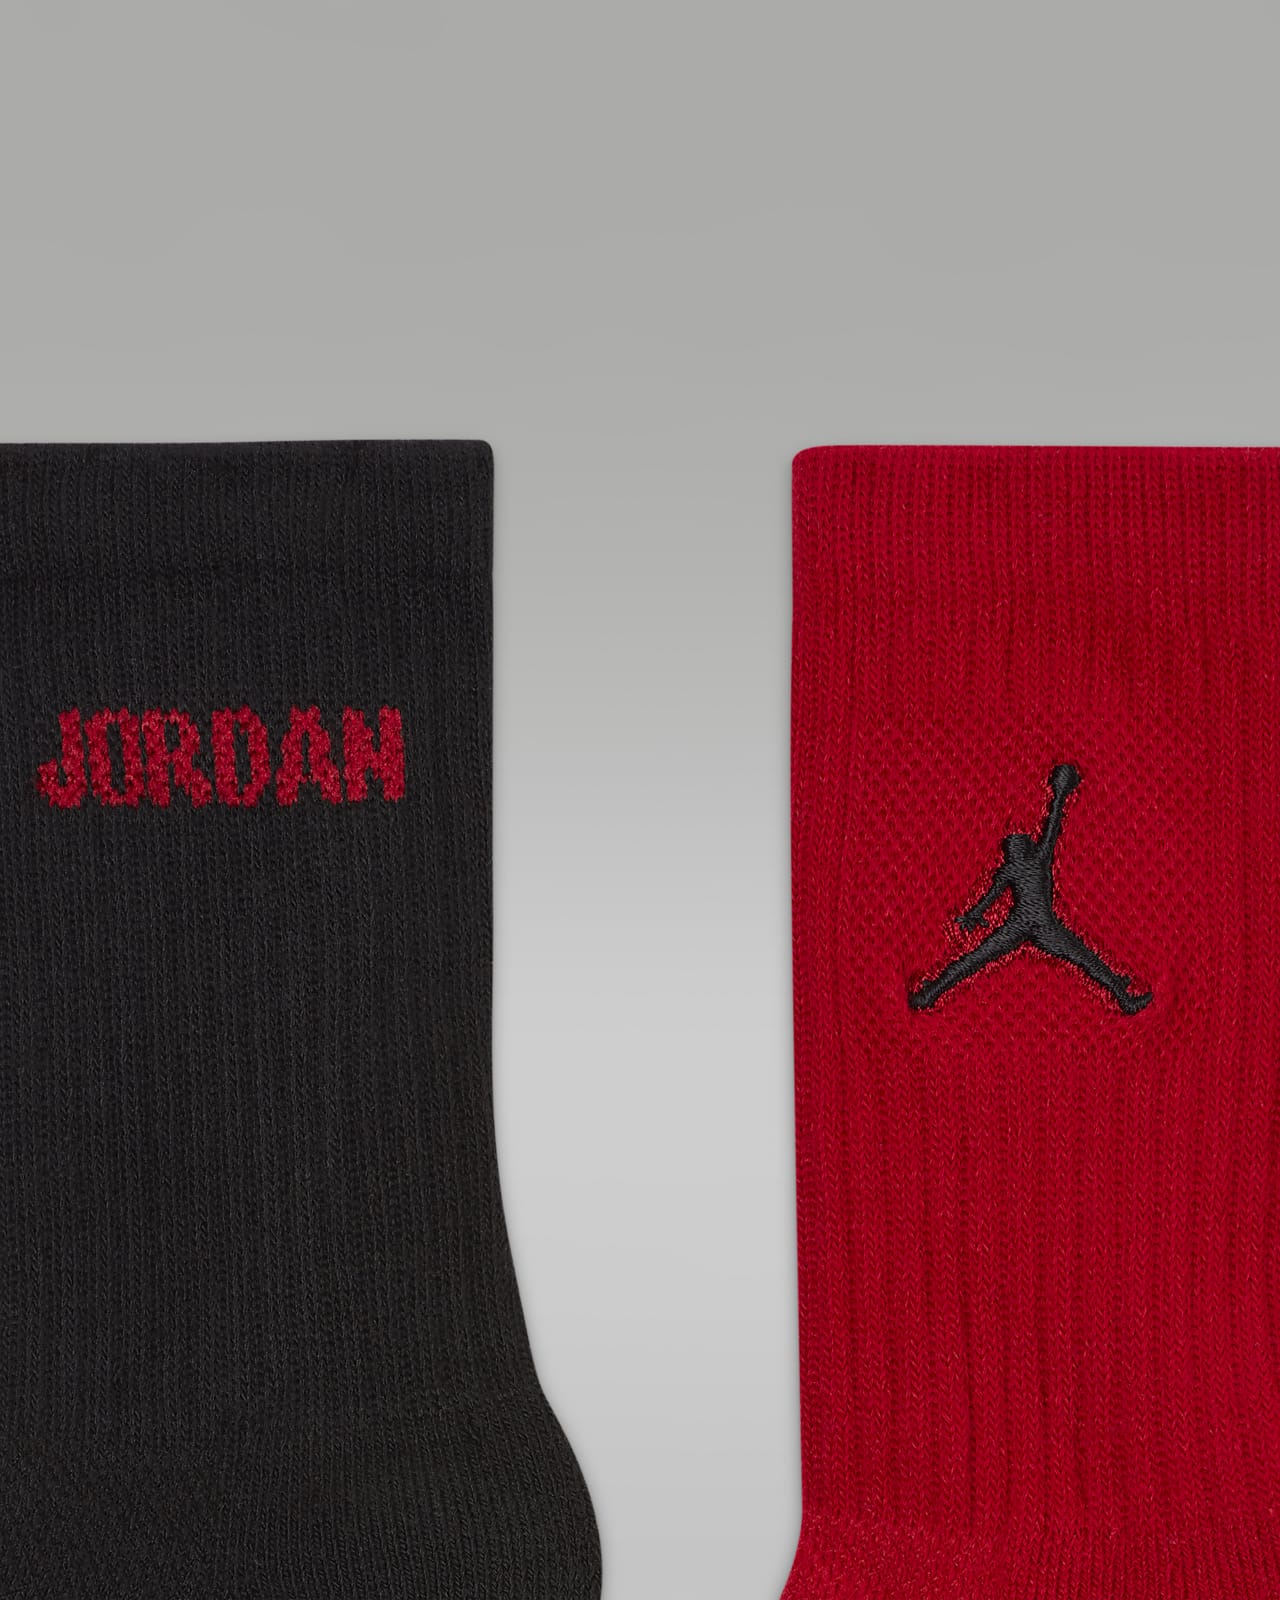 Calcetines largos para niños Jordan Legend (6 pares)